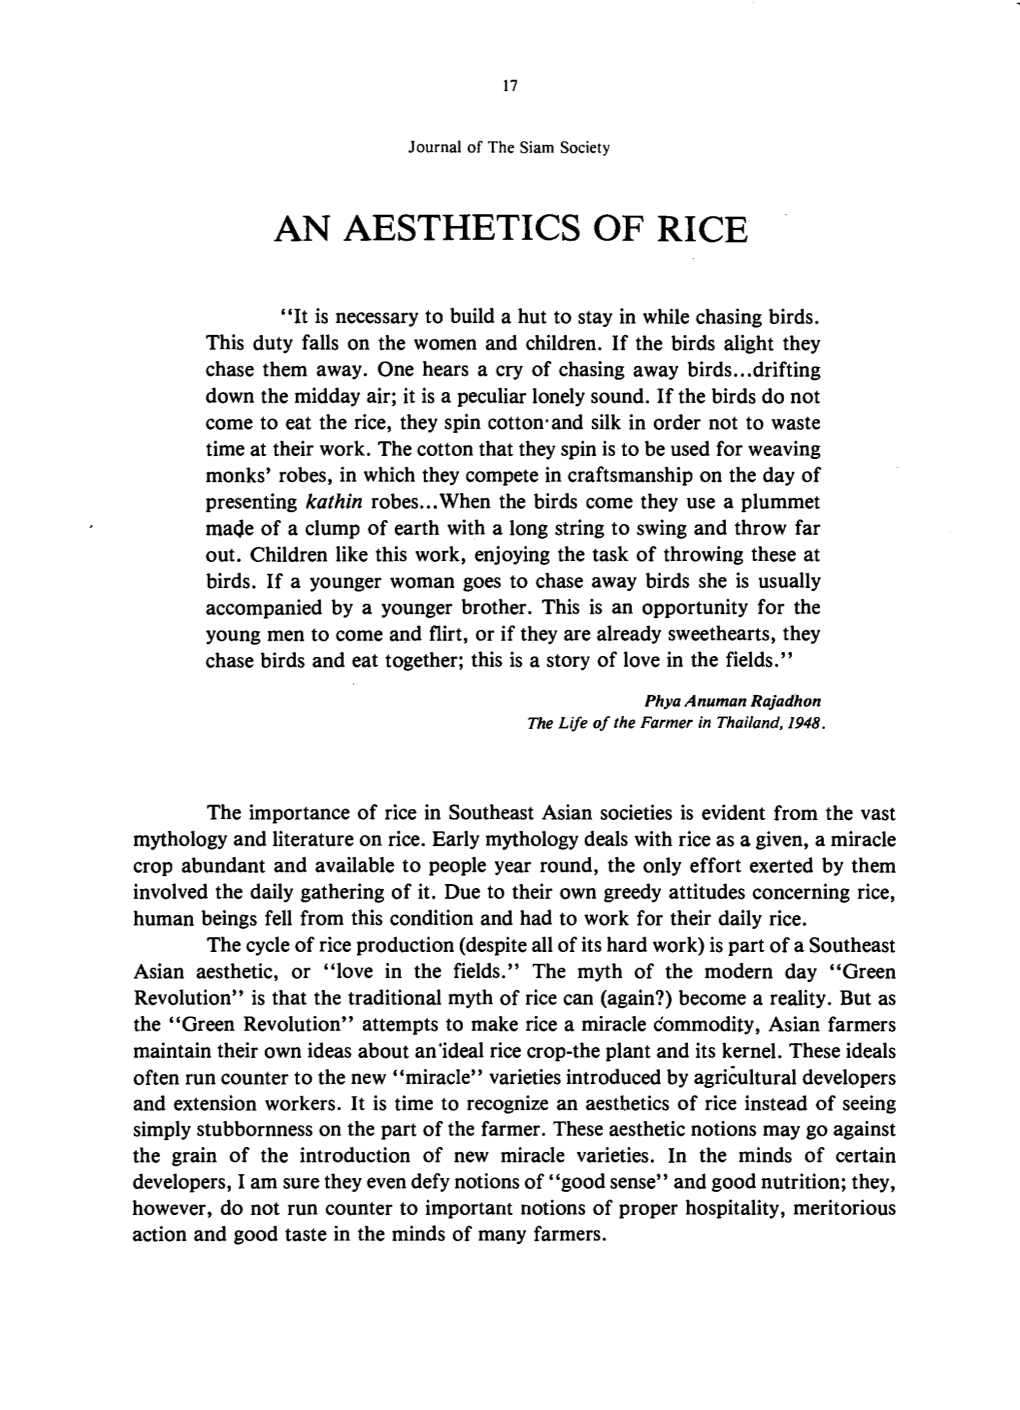 An Aesthetics of Rice